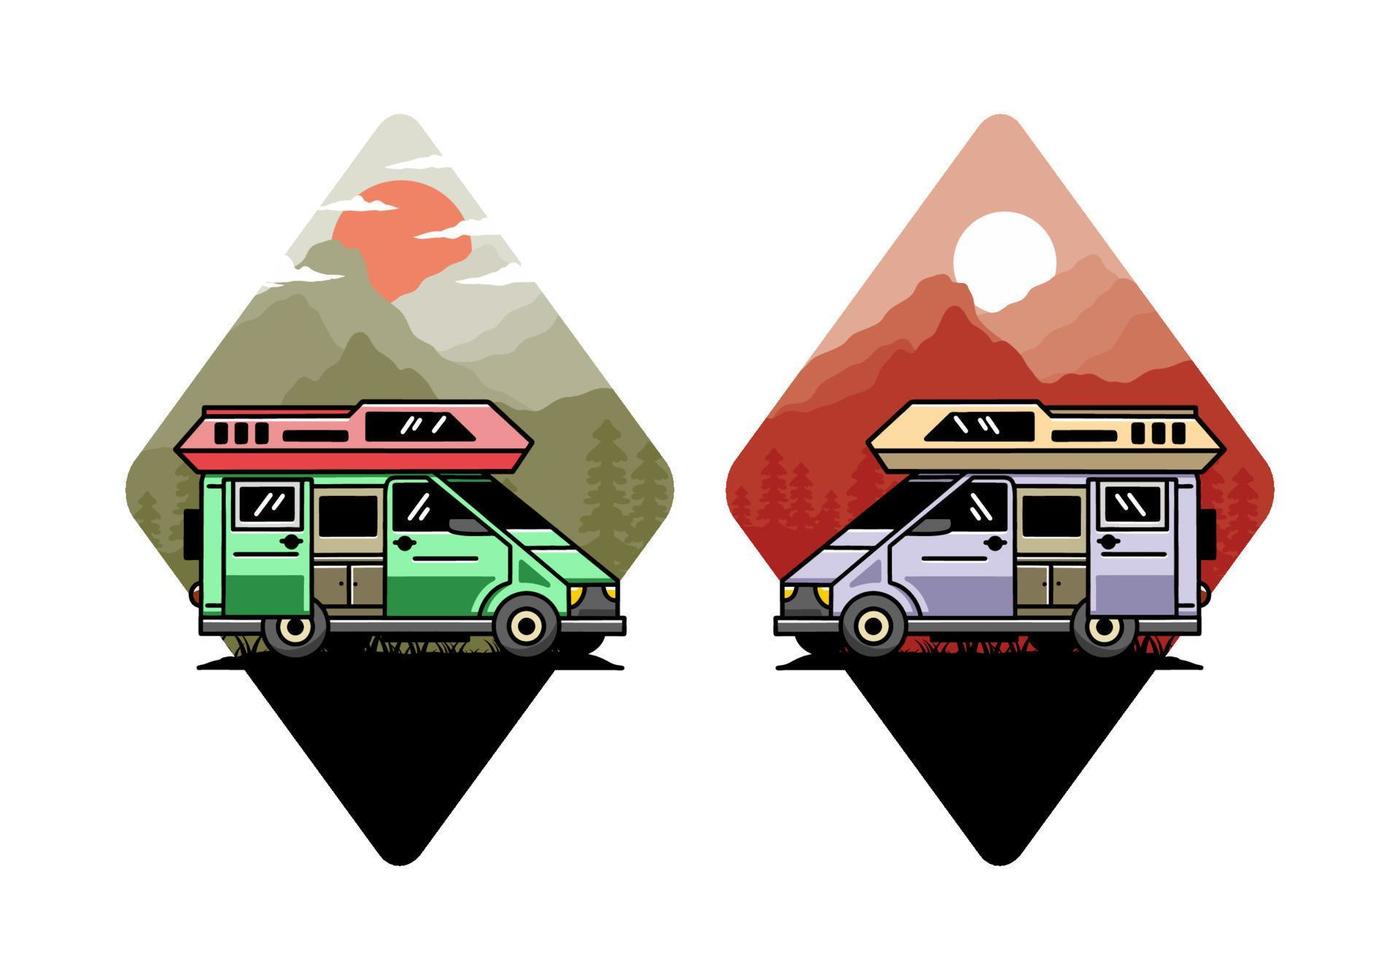 Big van with sliding door for camping illustration badge design vector